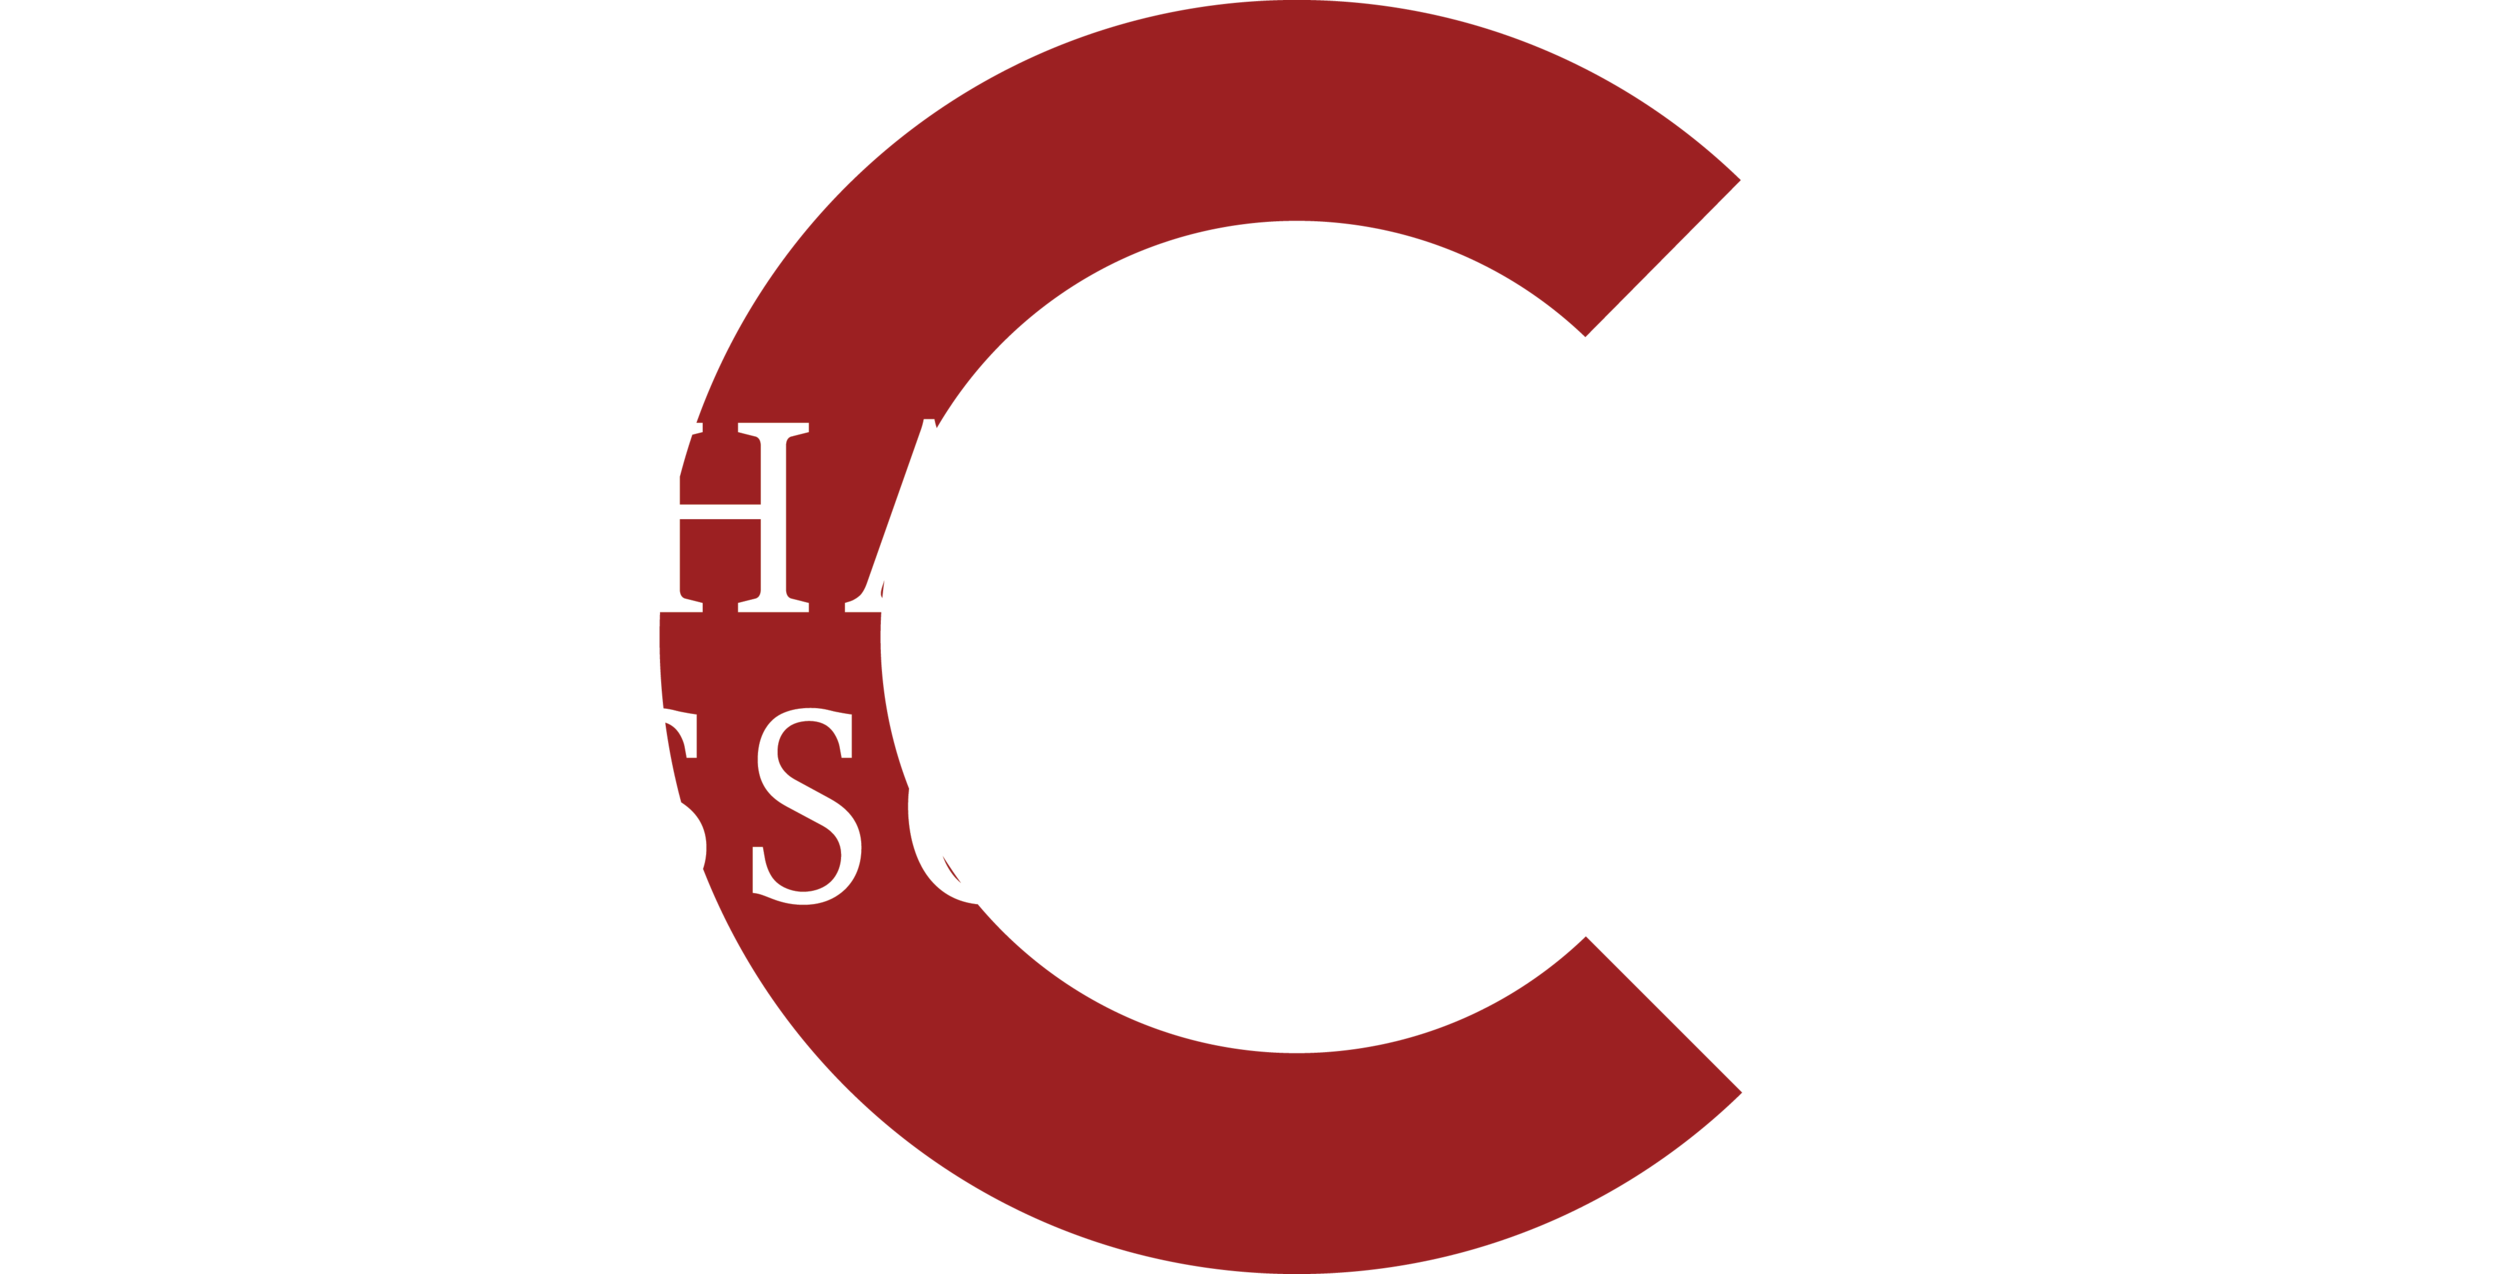 Michael Casey Associates